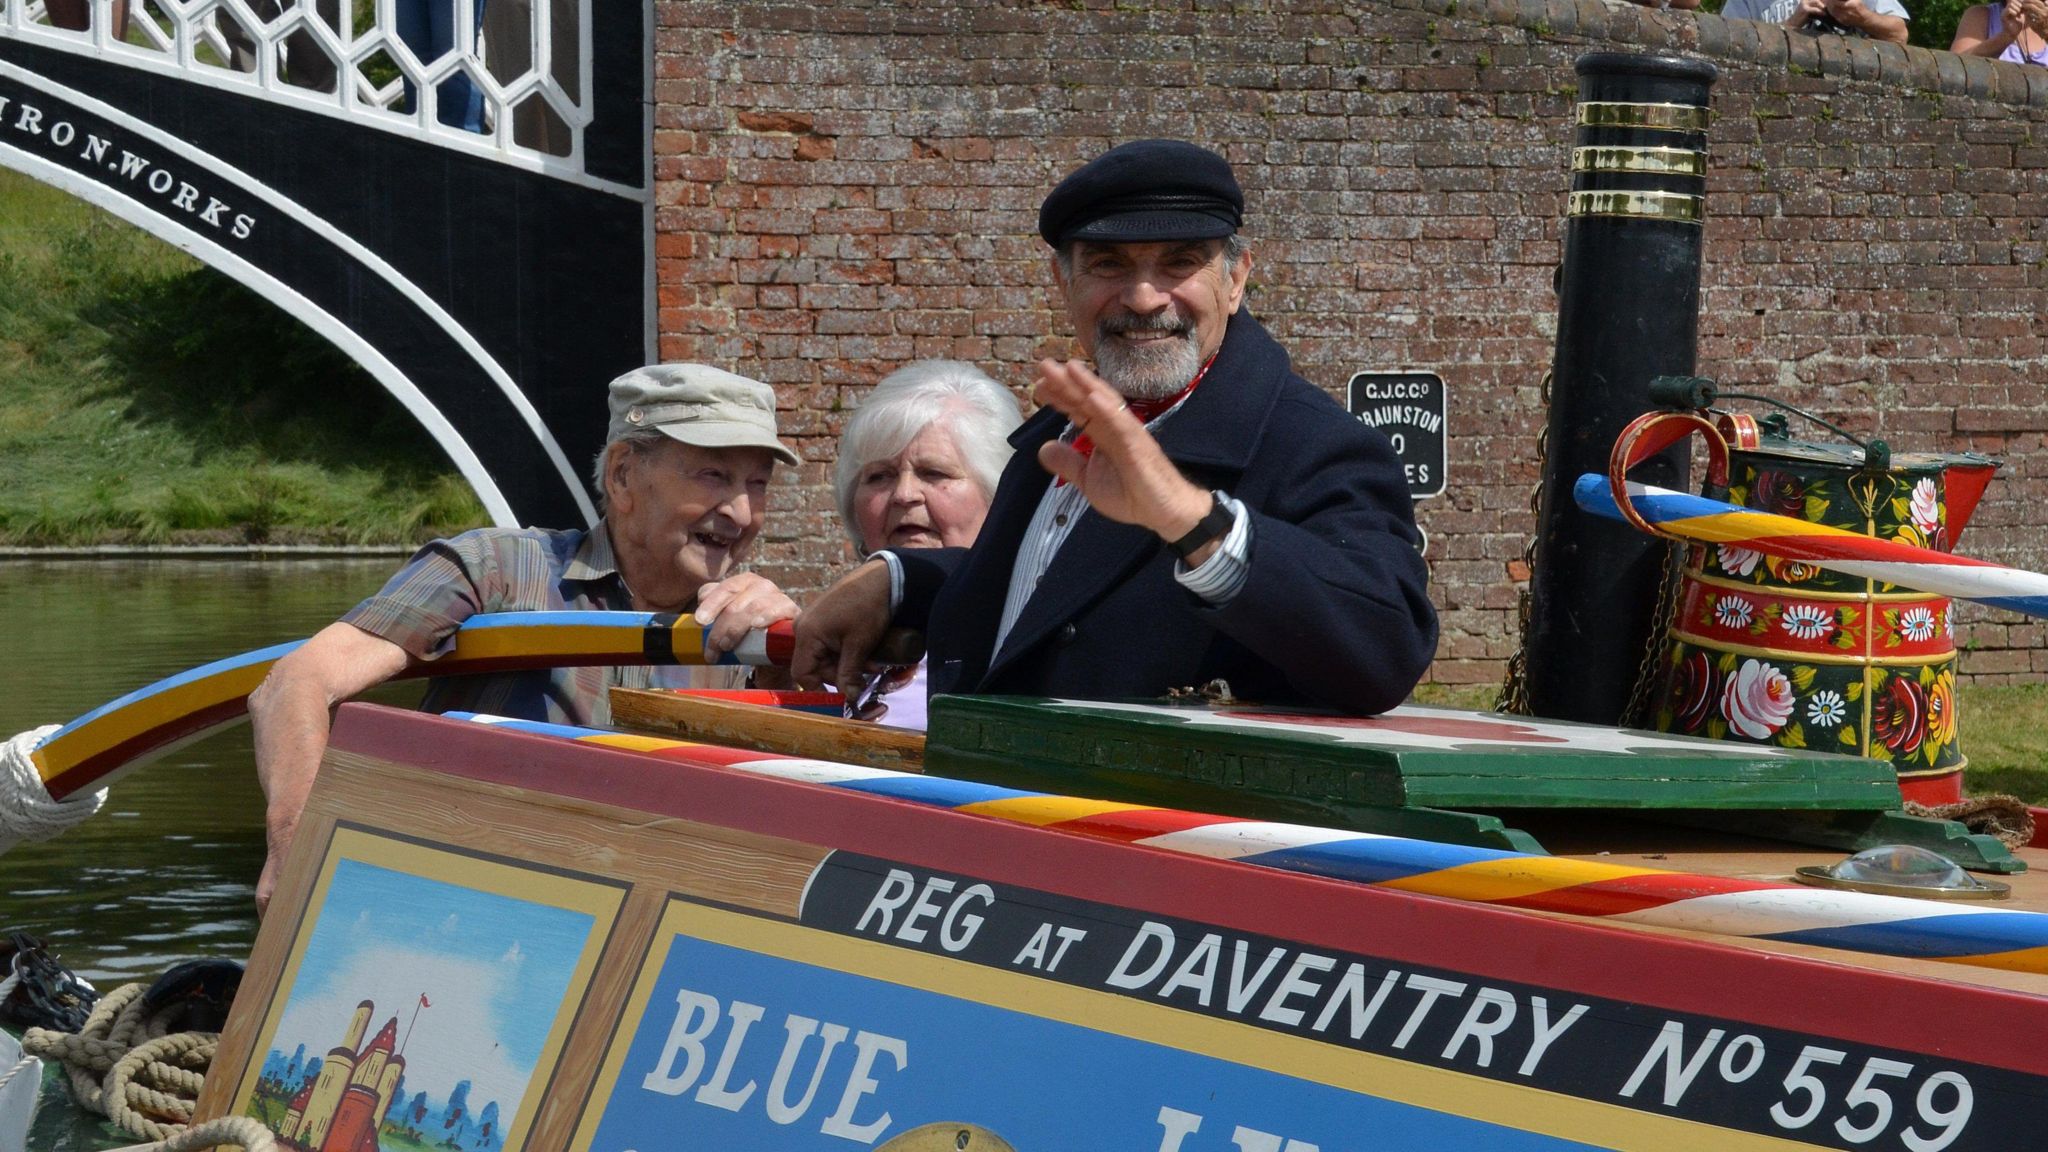 Sir David Suchet with a black cap waving from a narrowboat